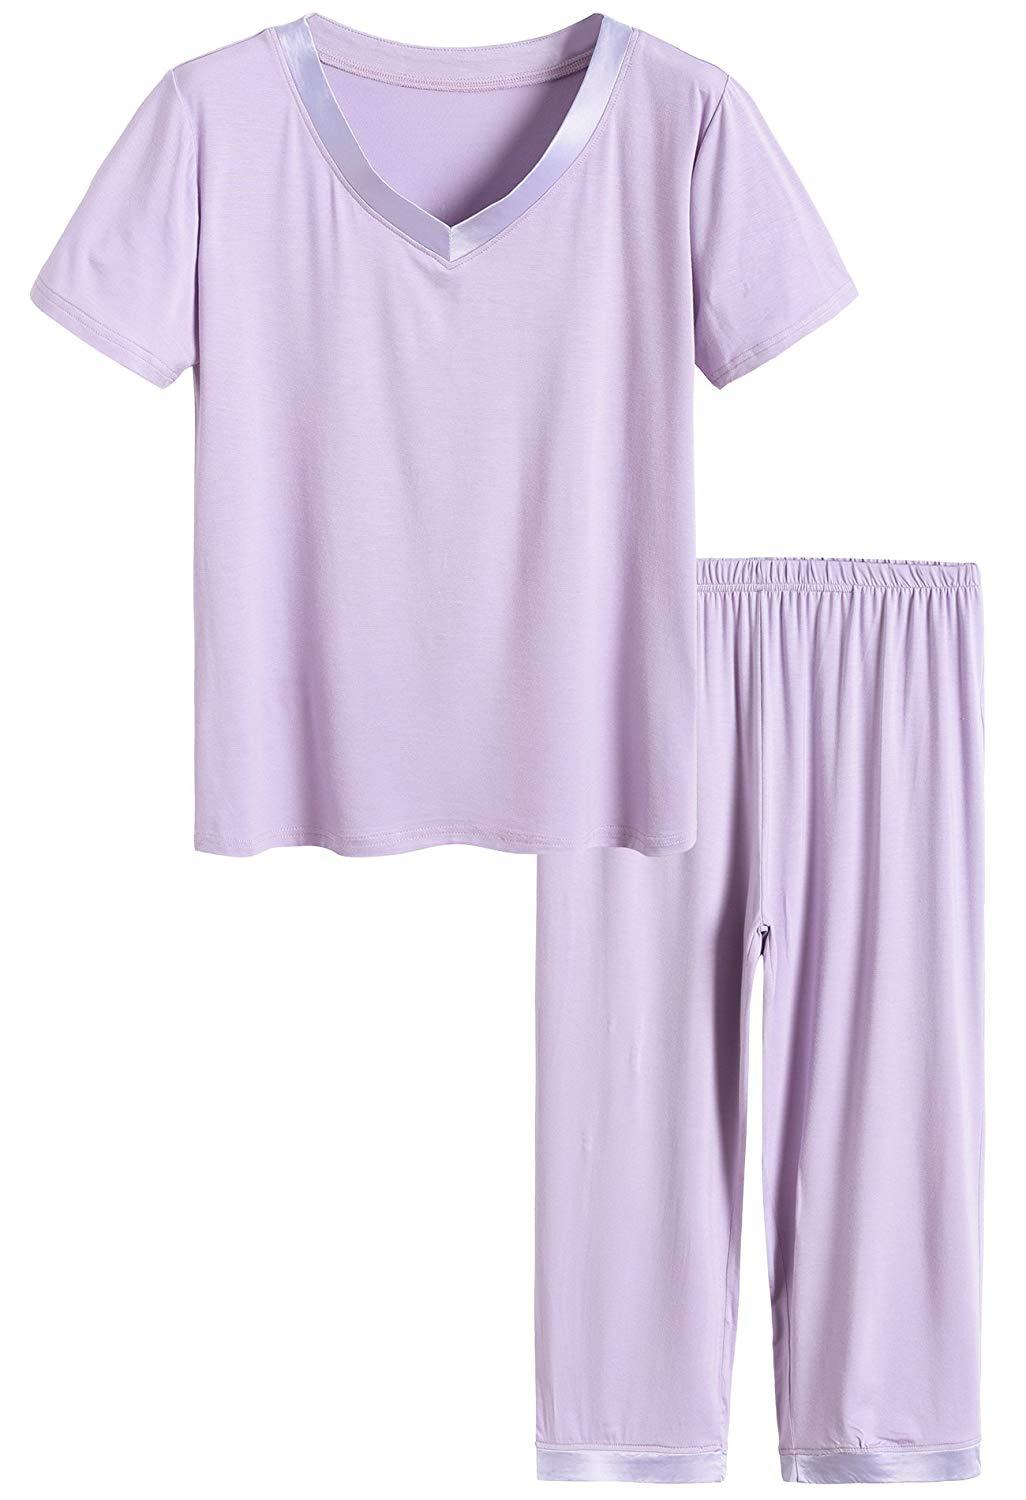 Women’s Bamboo Tops with Capri Pants Pajamas Set - Latuza